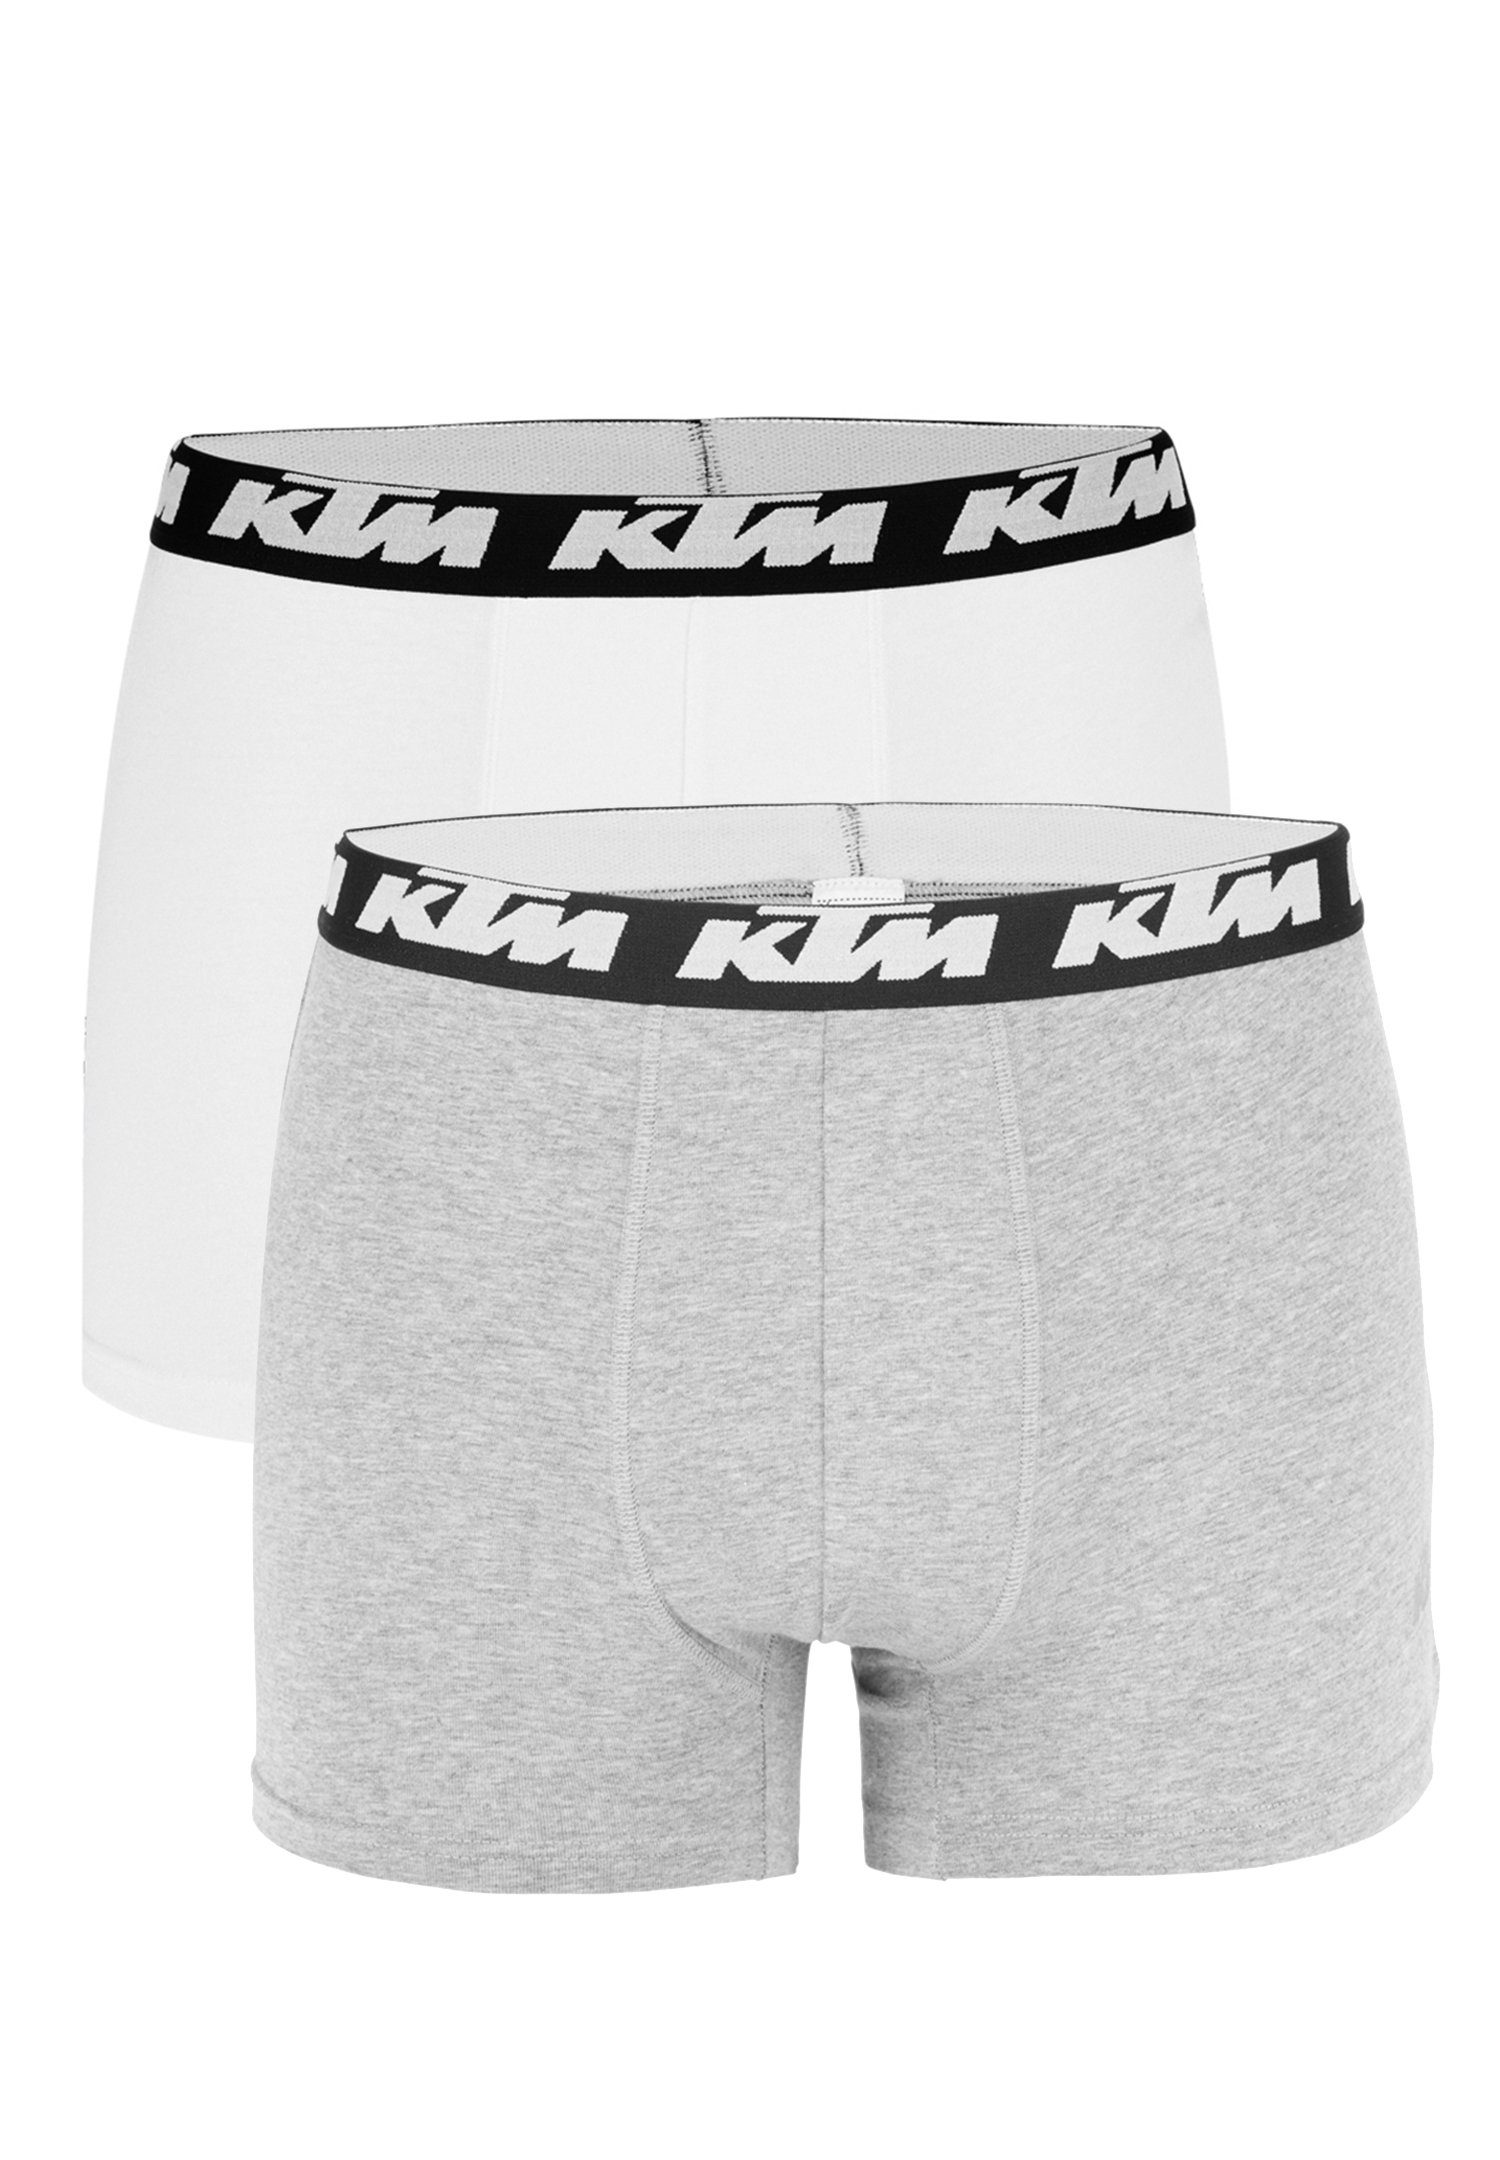 Man (2-St) / Grey White X2 KTM Boxershorts Pack Light Boxer Cotton